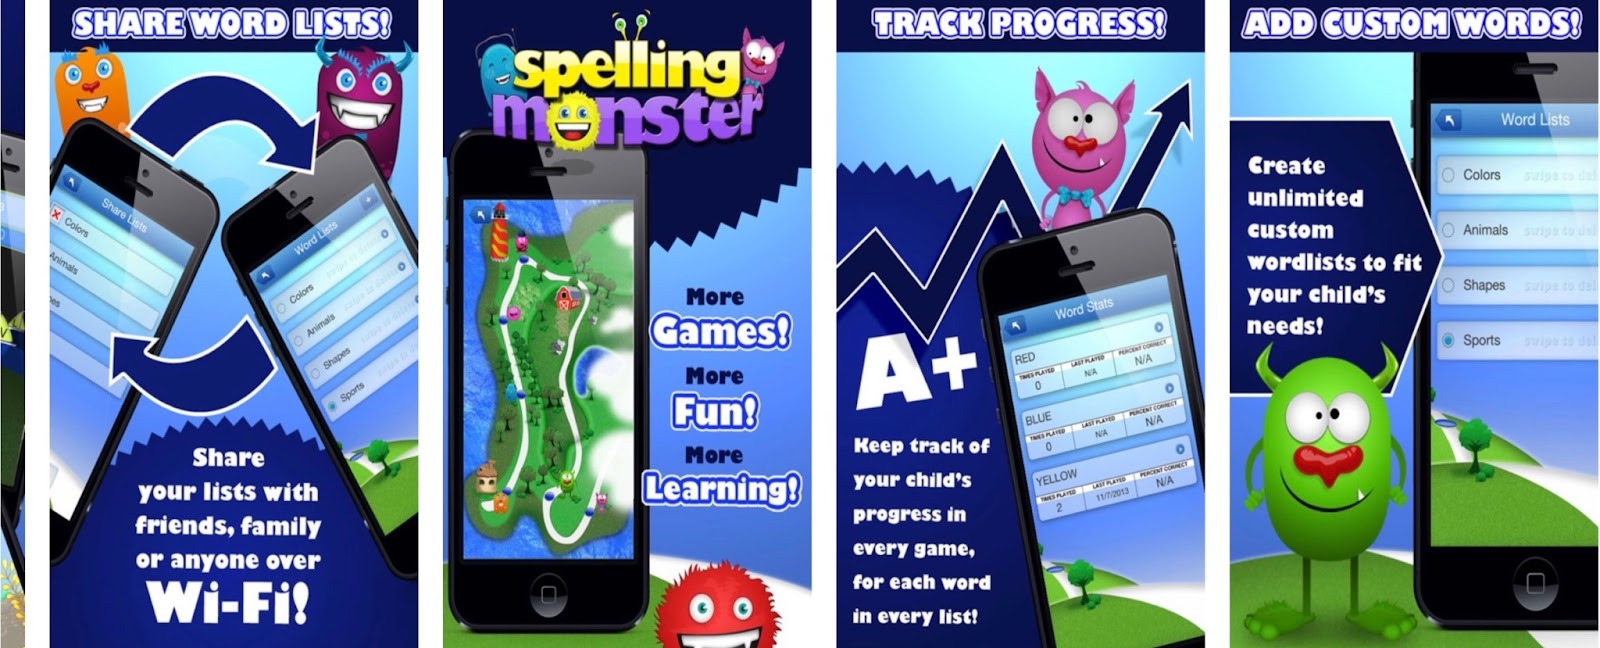 Spelling Monster – App for Practicing Spelling Words